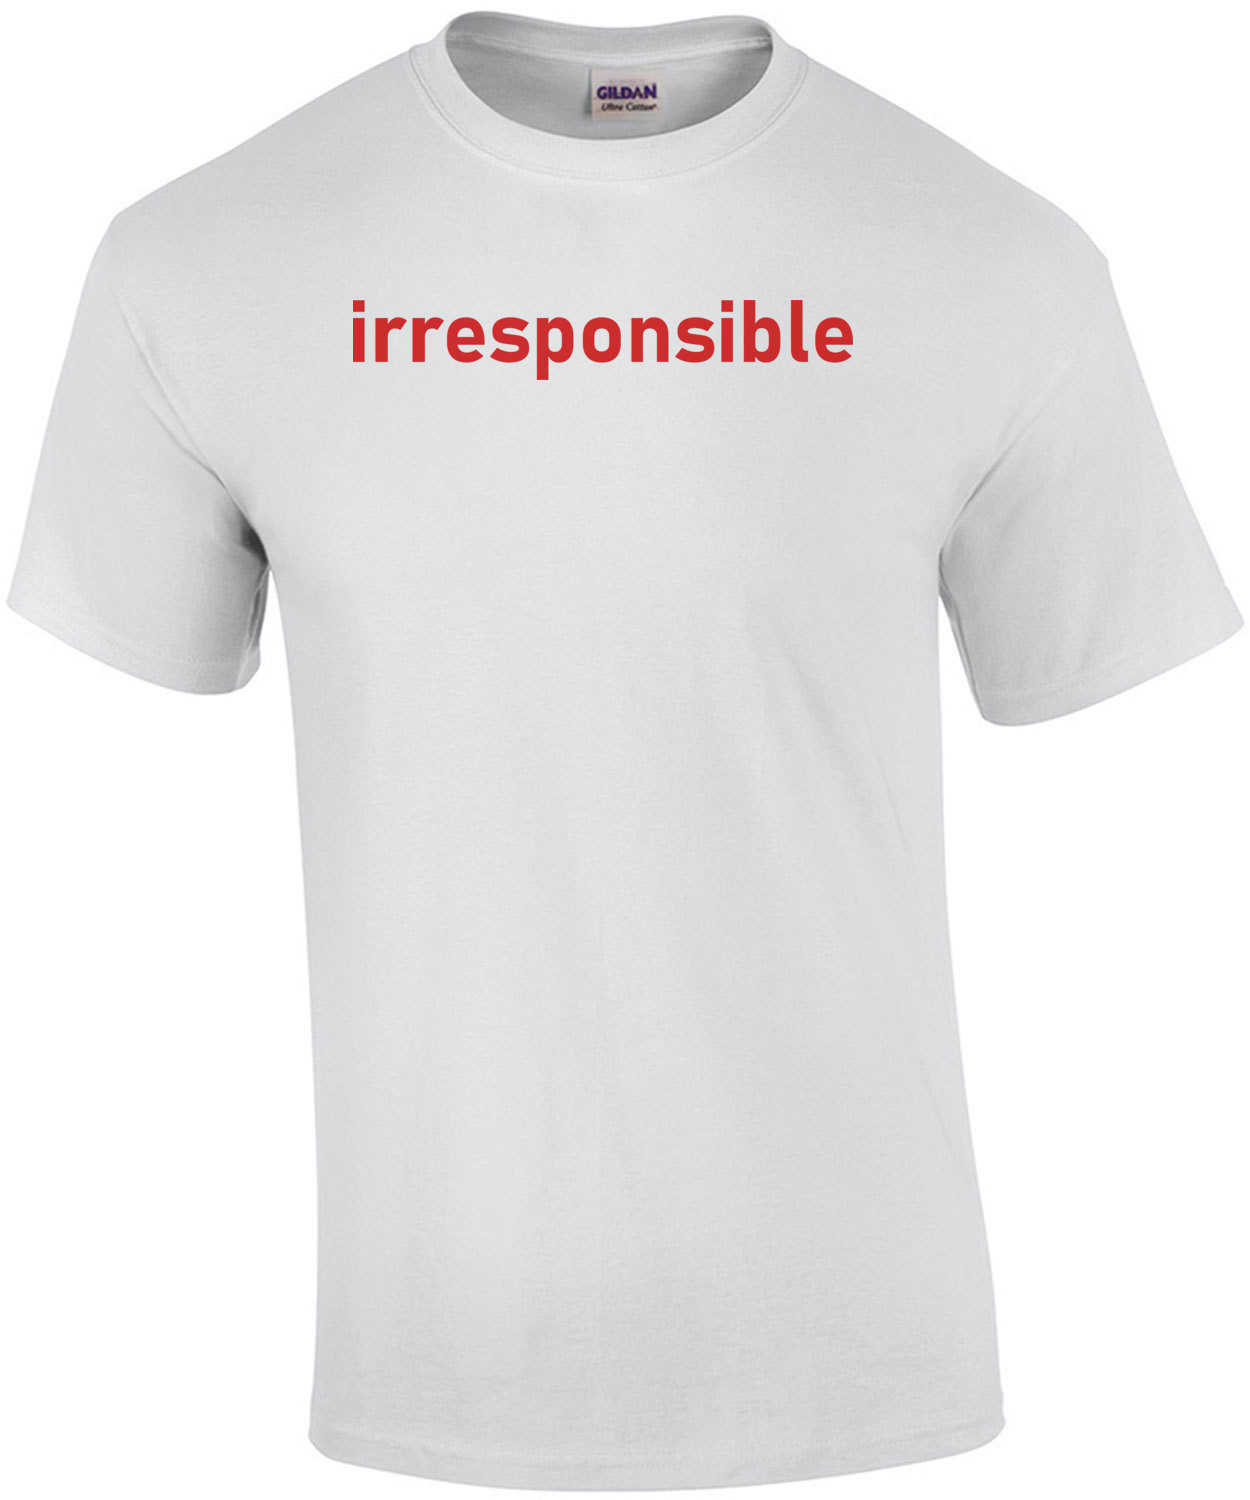 irresponsible t-shirt